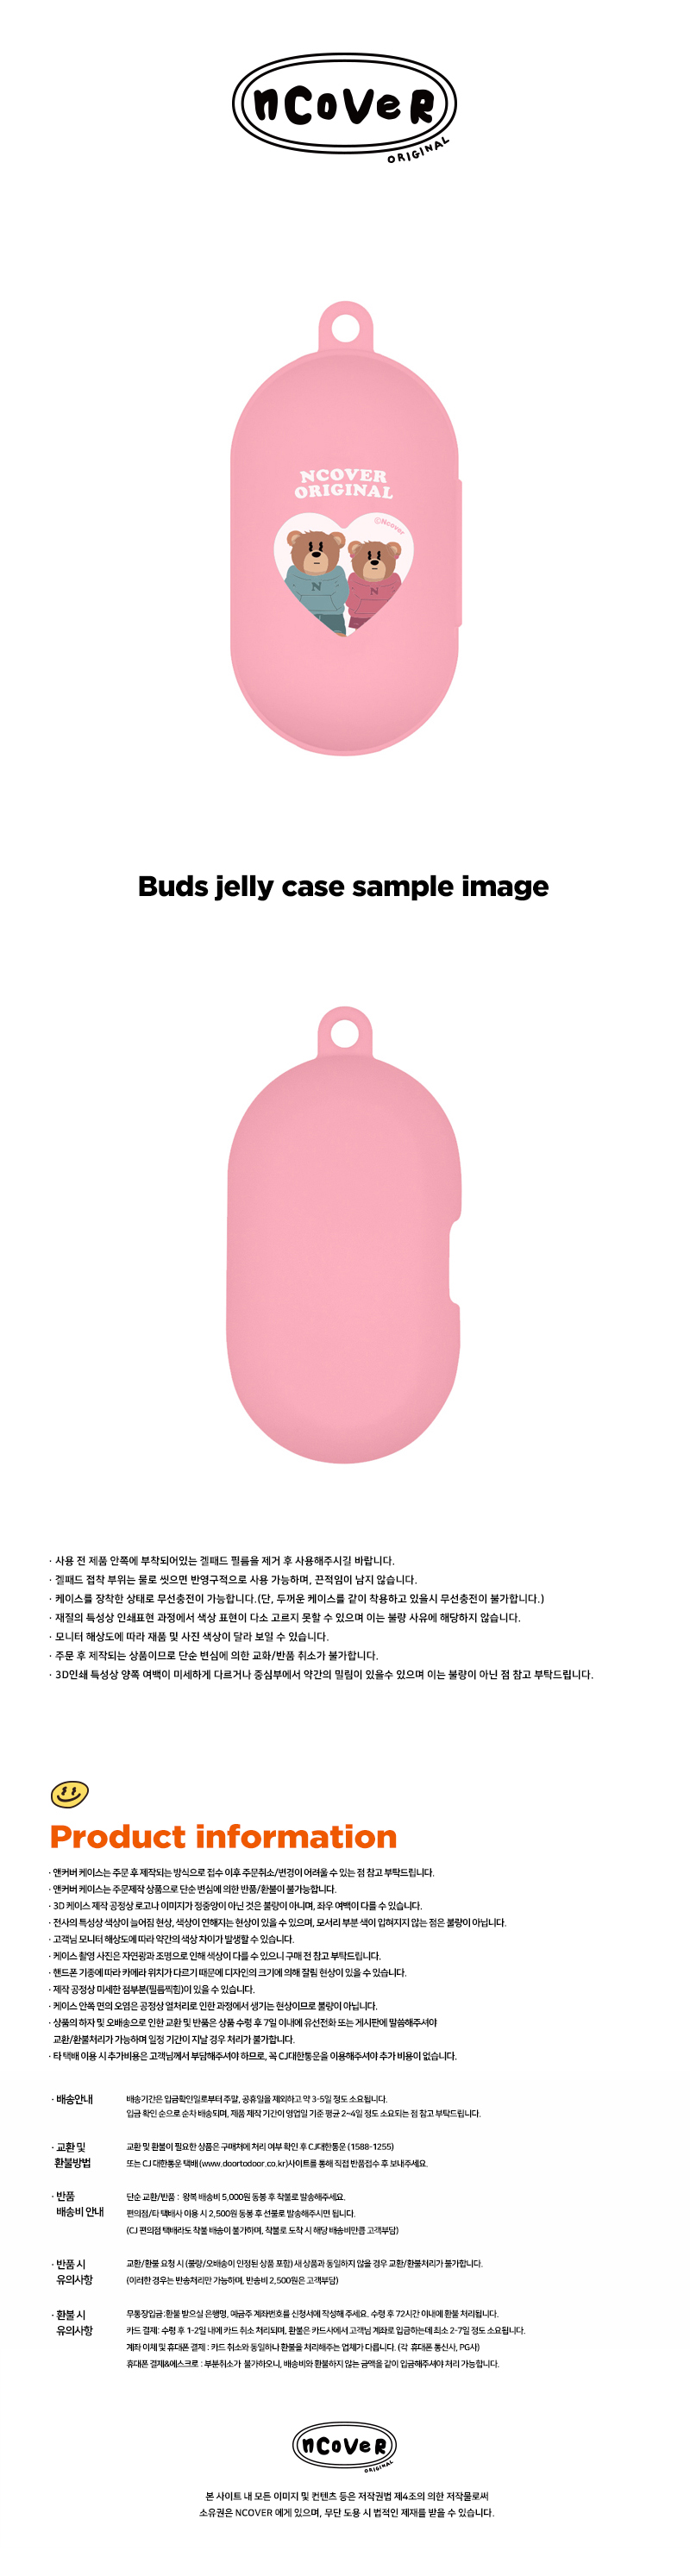  Couple hoodie bruin-pink(buds jelly)  15,000원 - 바이인터내셔널주식회사 디지털, 이어폰/헤드폰, 이어폰/헤드폰 액세서리, 에어팟/에어팟프로 케이스 바보사랑  Couple hoodie bruin-pink(buds jelly)  15,000원 - 바이인터내셔널주식회사 디지털, 이어폰/헤드폰, 이어폰/헤드폰 액세서리, 에어팟/에어팟프로 케이스 바보사랑